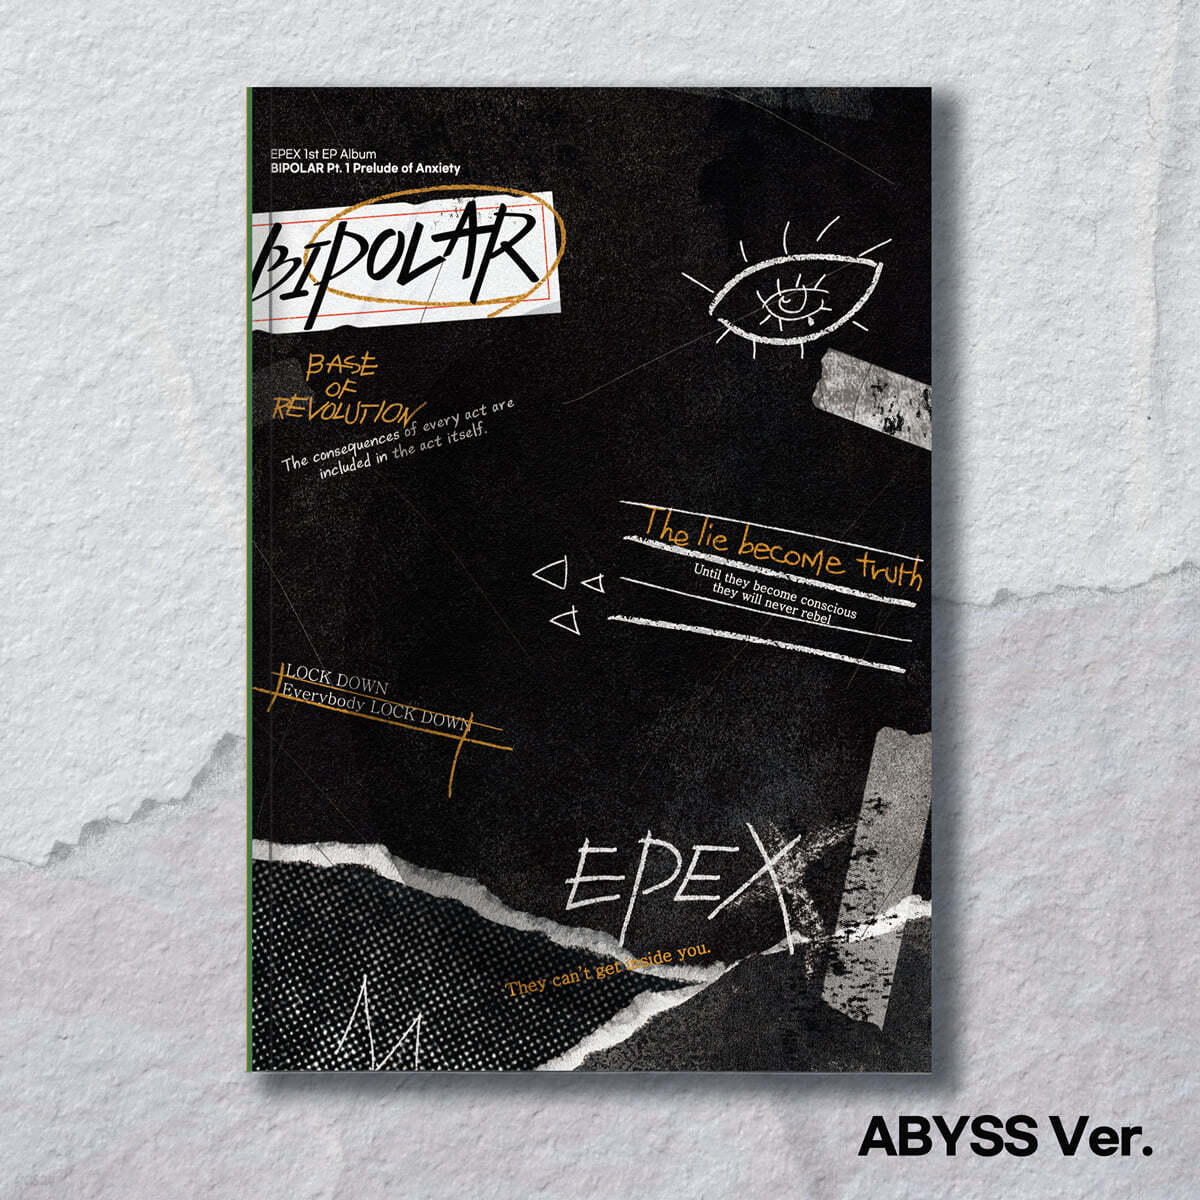 EPEX (이펙스) - EPEX 1st EP Album 'Bipolar Pt.1 불안의 서' [ABYSS ver.]